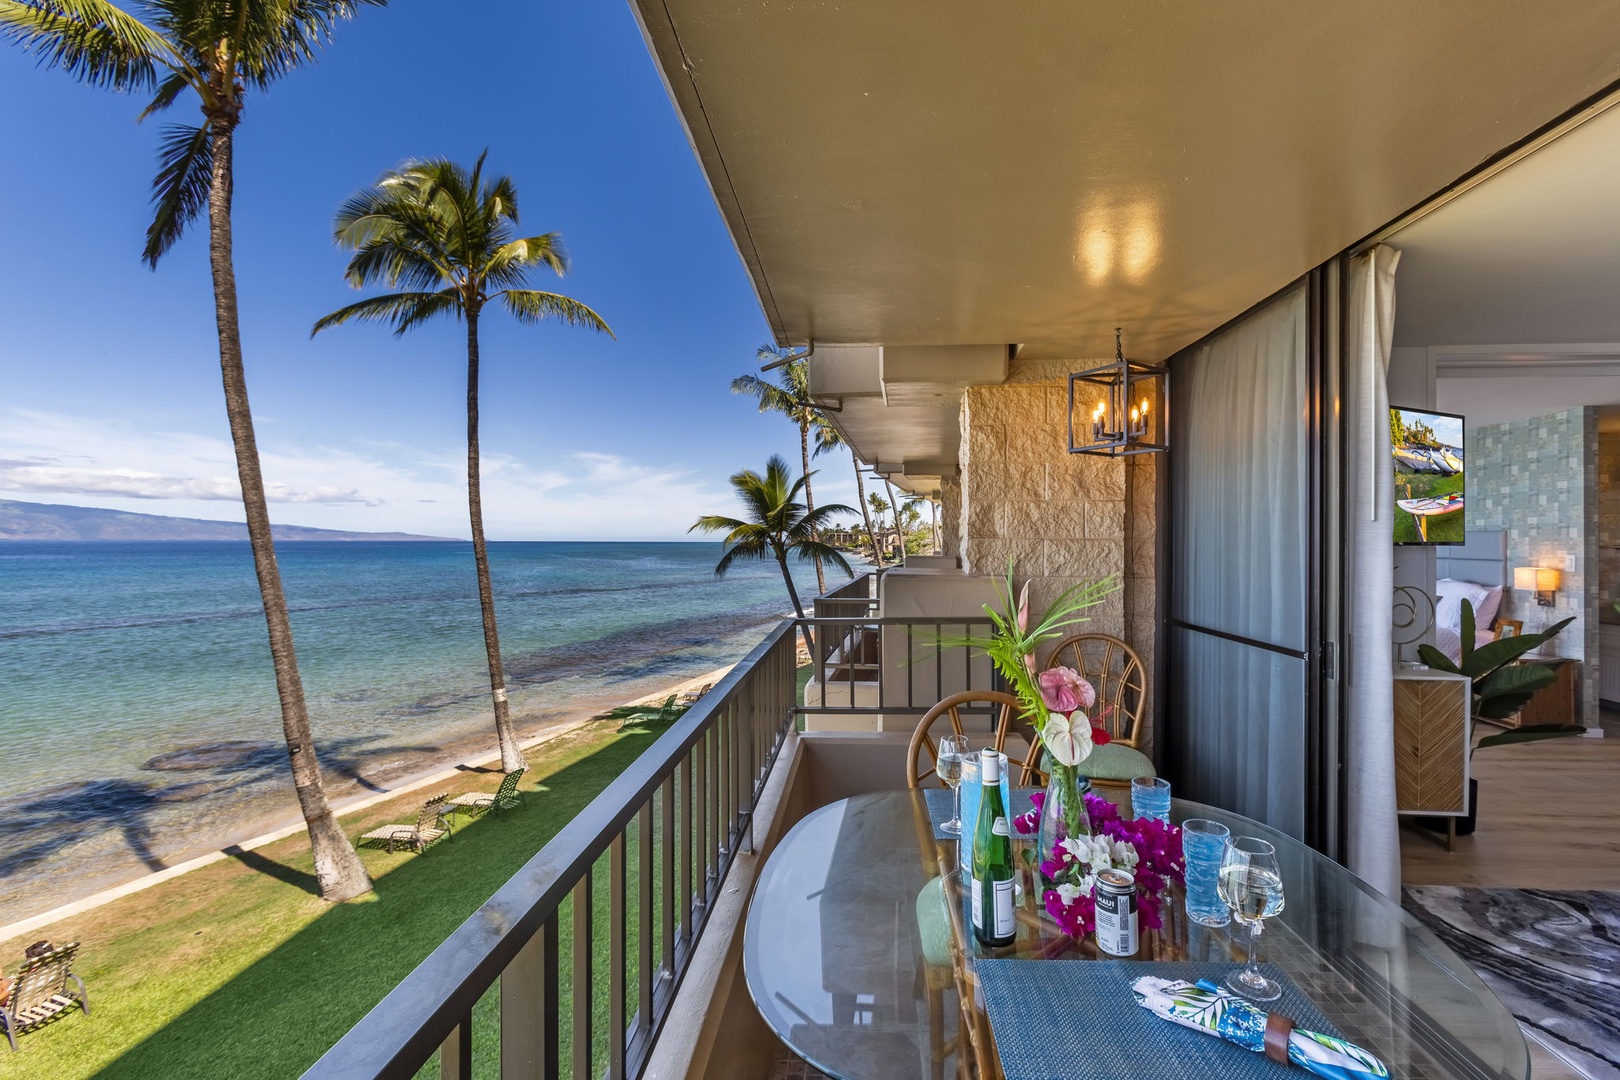 The Serenity Suite Paki Maui 204